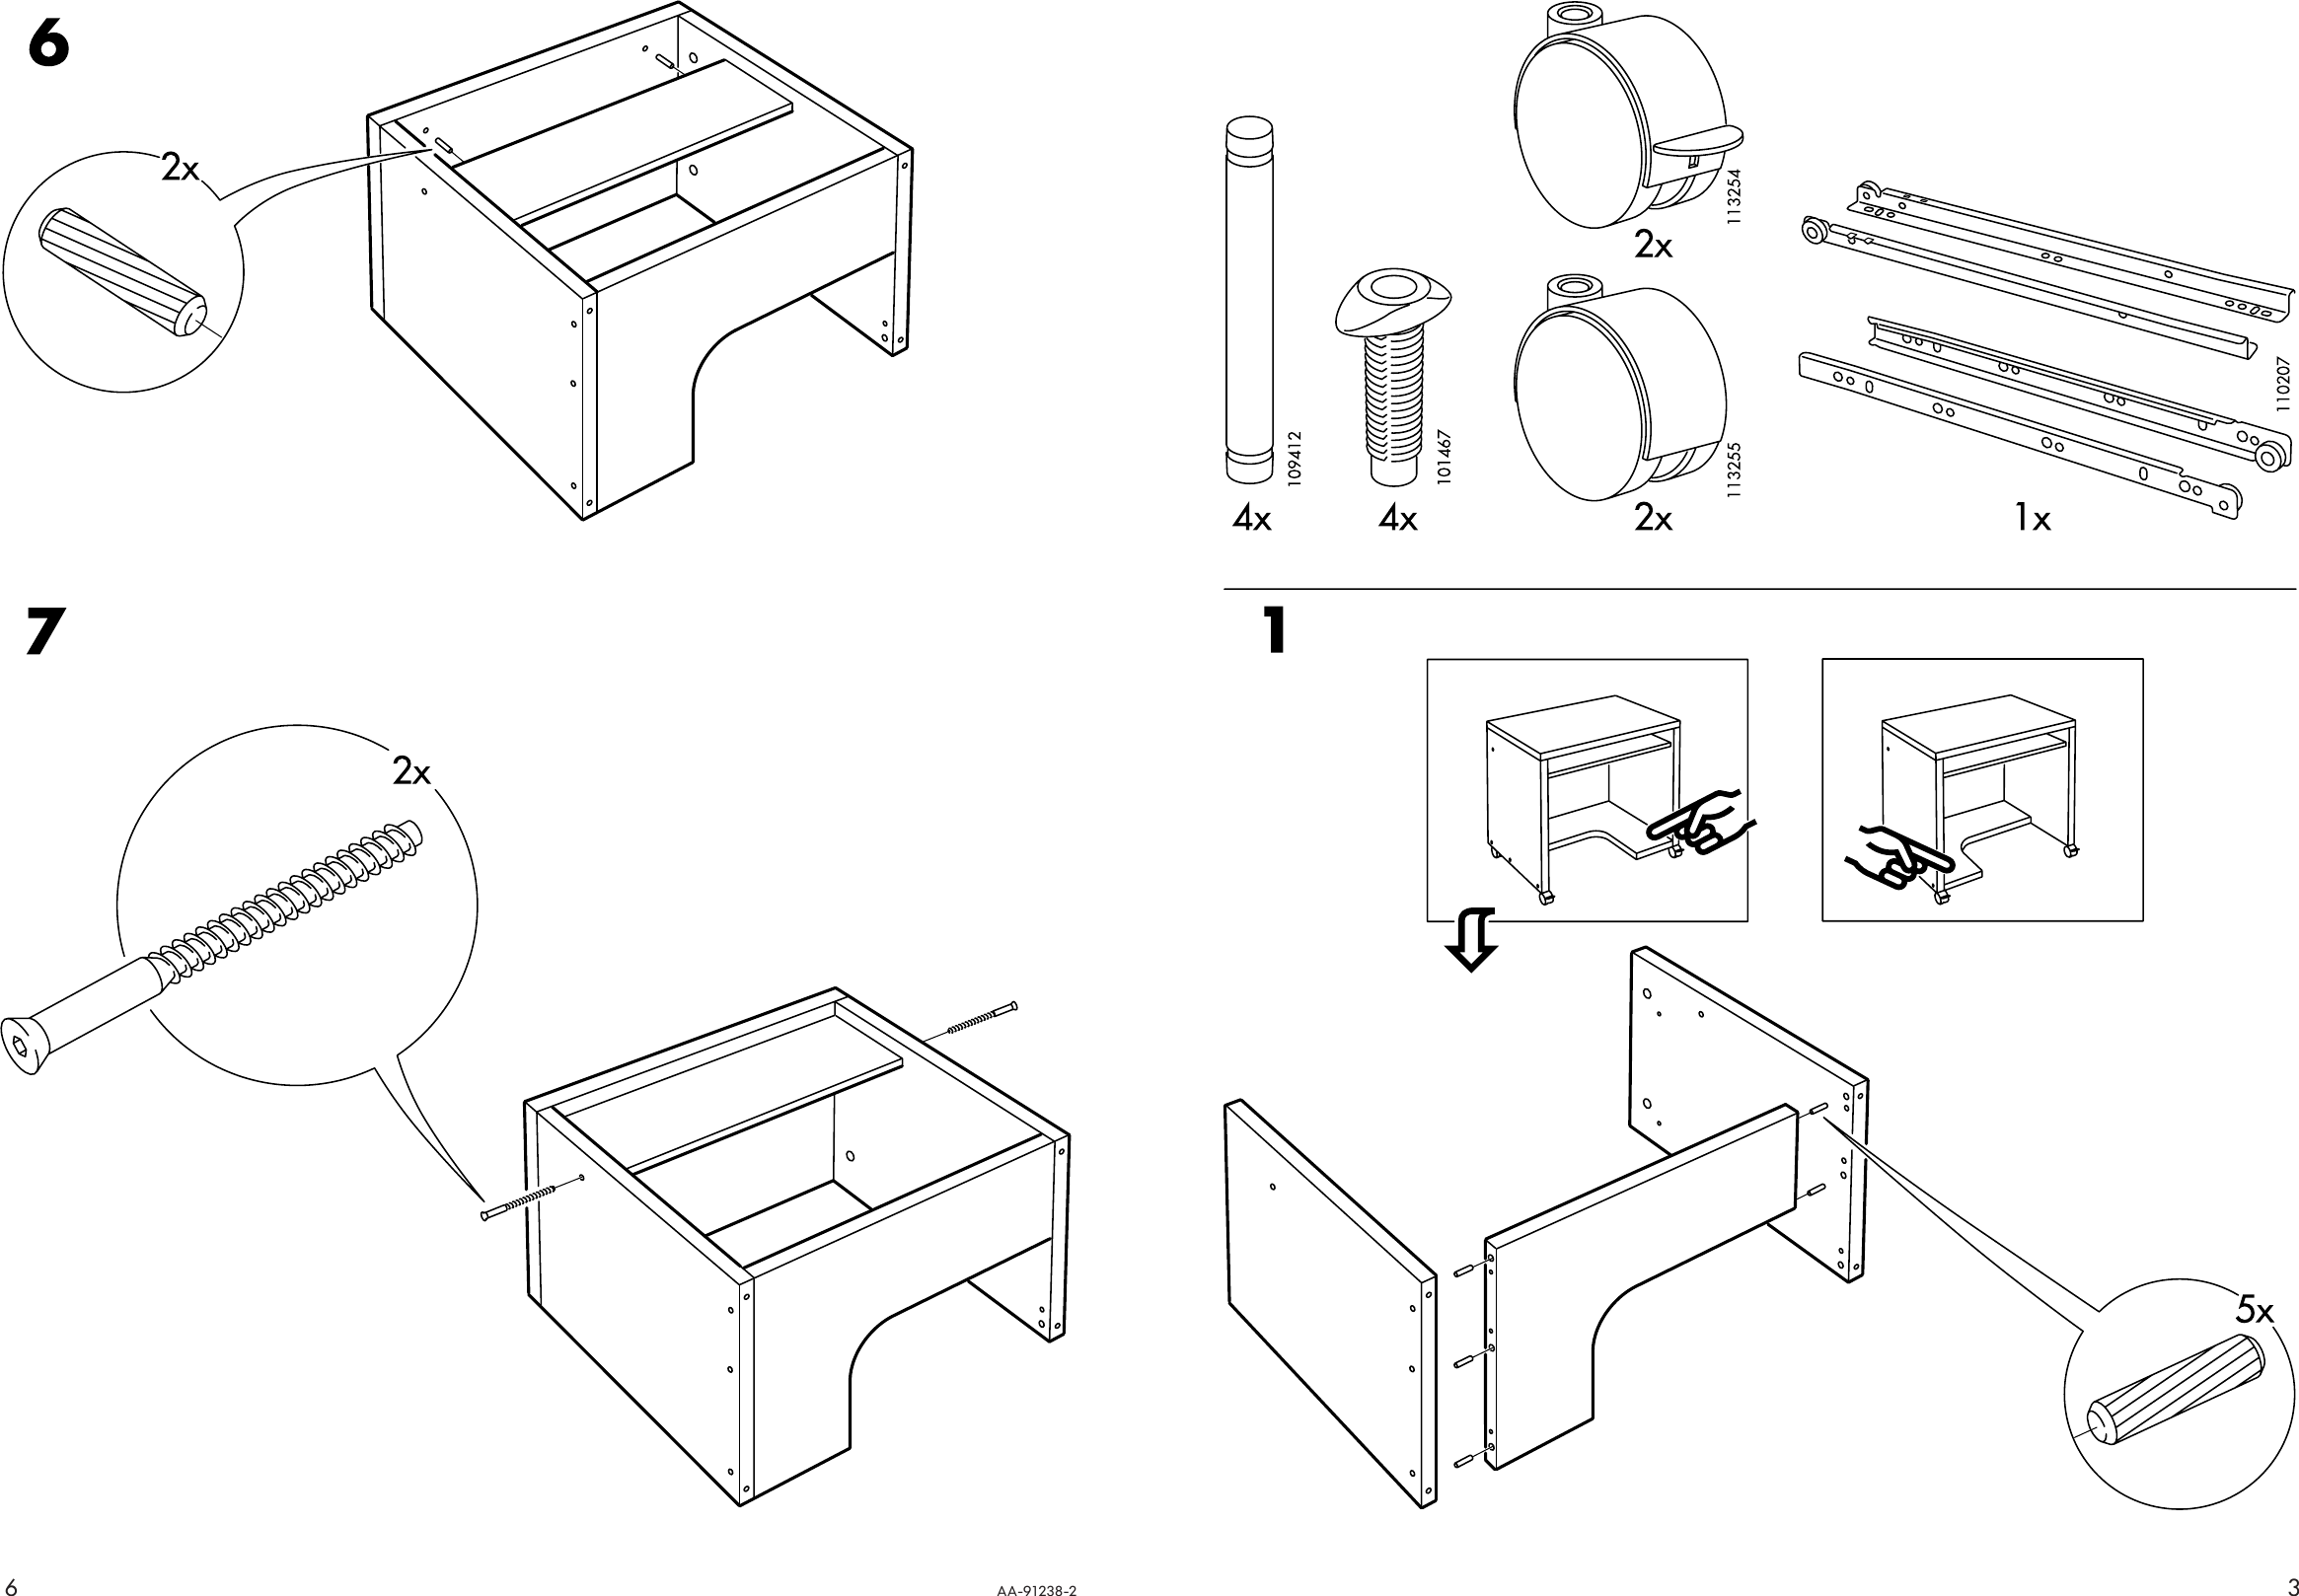 Page 3 of 4 - Ikea Ikea-Mikael-Computer-Table-W-Casters-30X20-Assembly-Instruction-6  Ikea-mikael-computer-table-w-casters-30x20-assembly-instruction